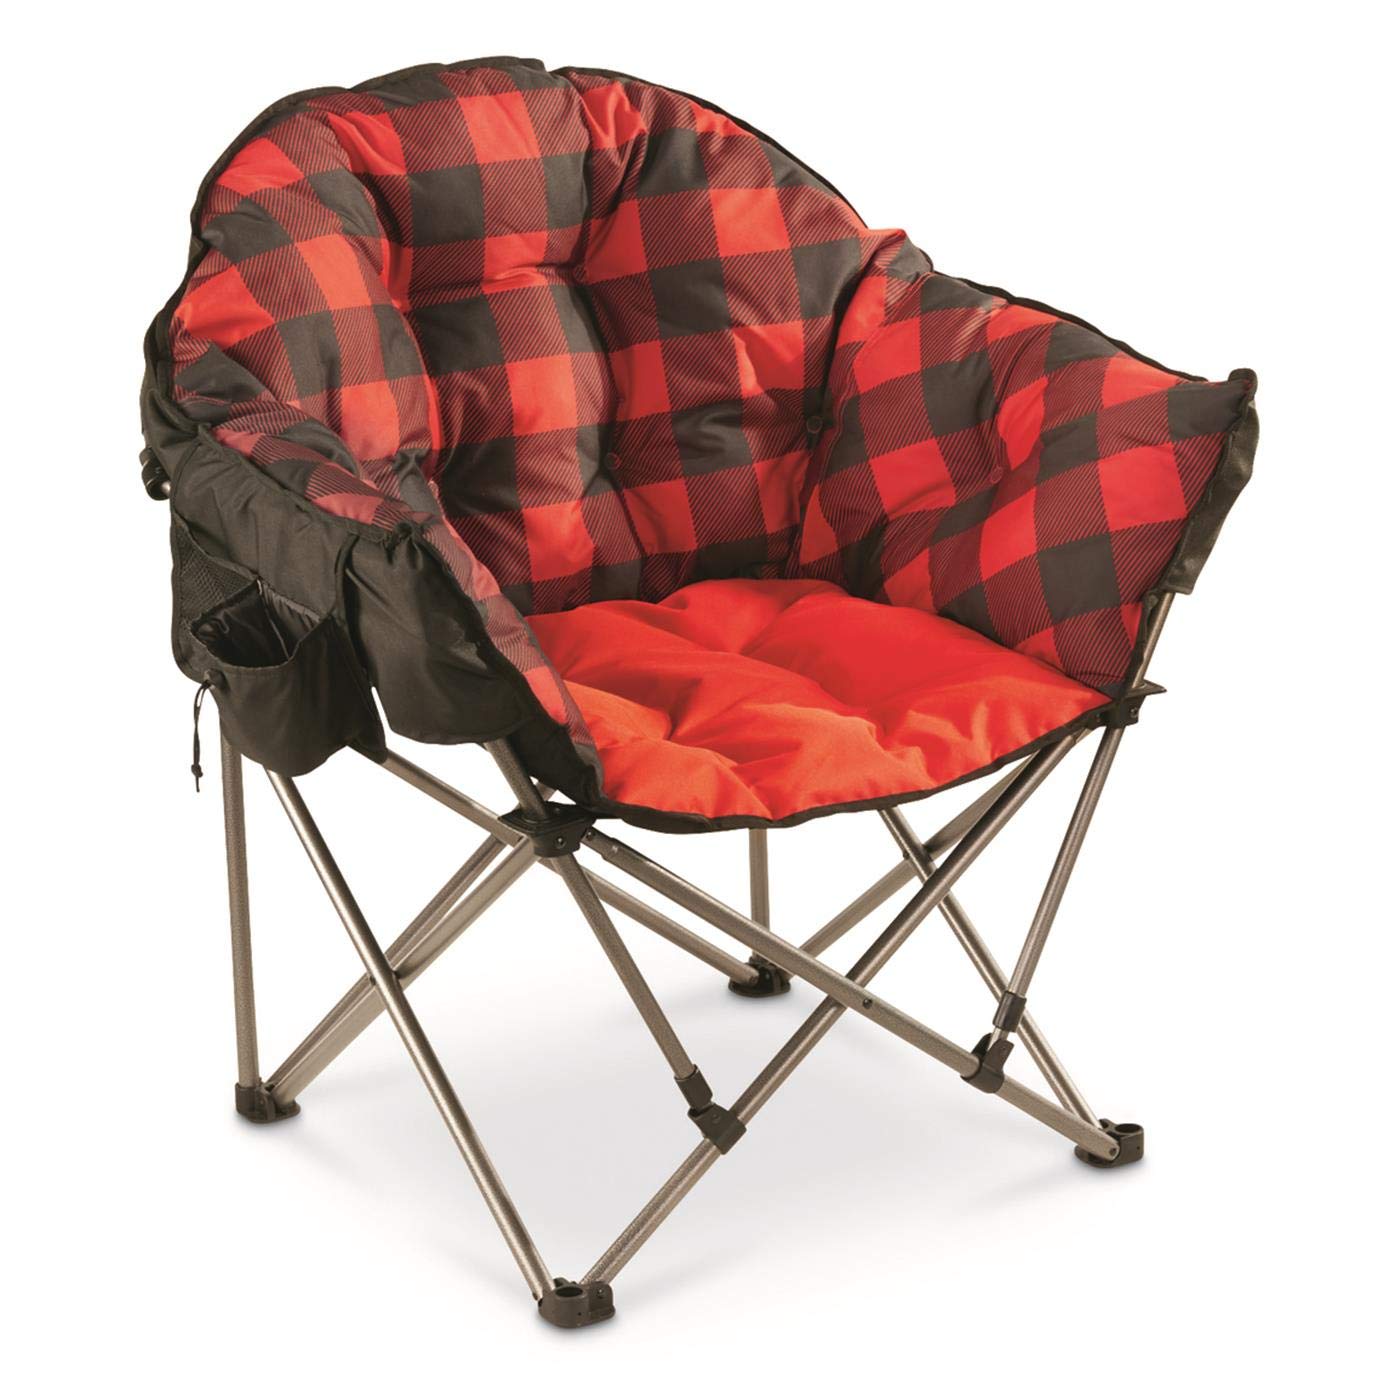 Camp Chair We Love!